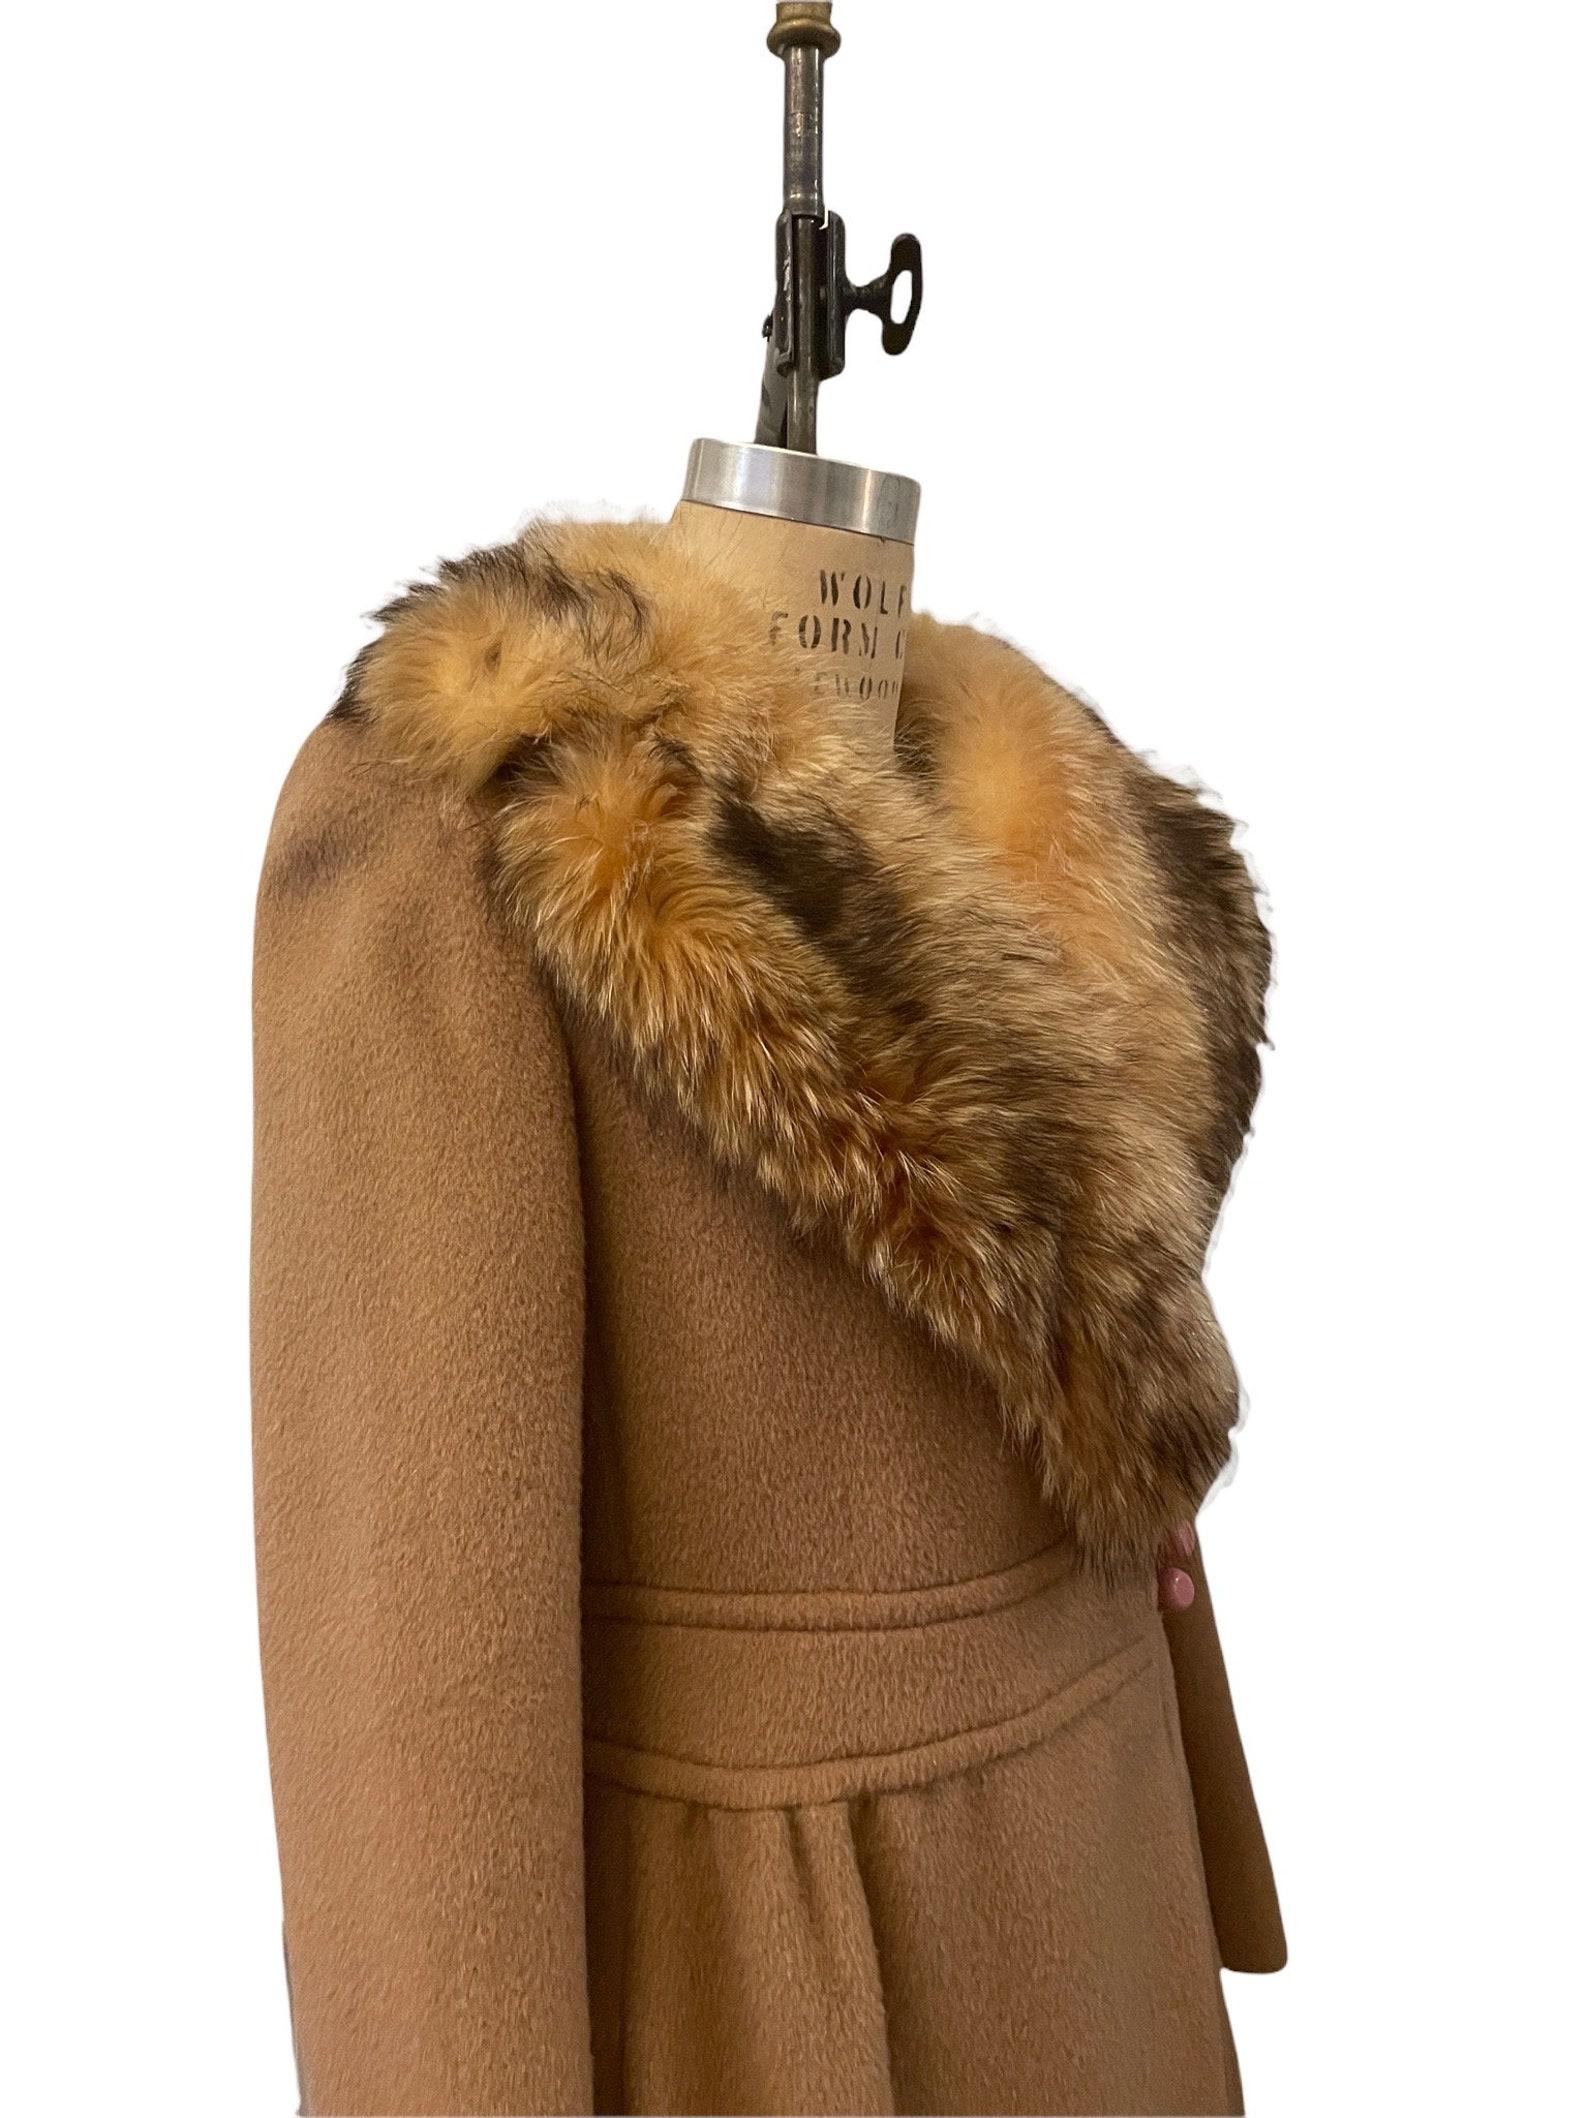 Pierre Cardin Wool Princess Coat with Fox Fur Collar, Circa 1970s For Sale 4